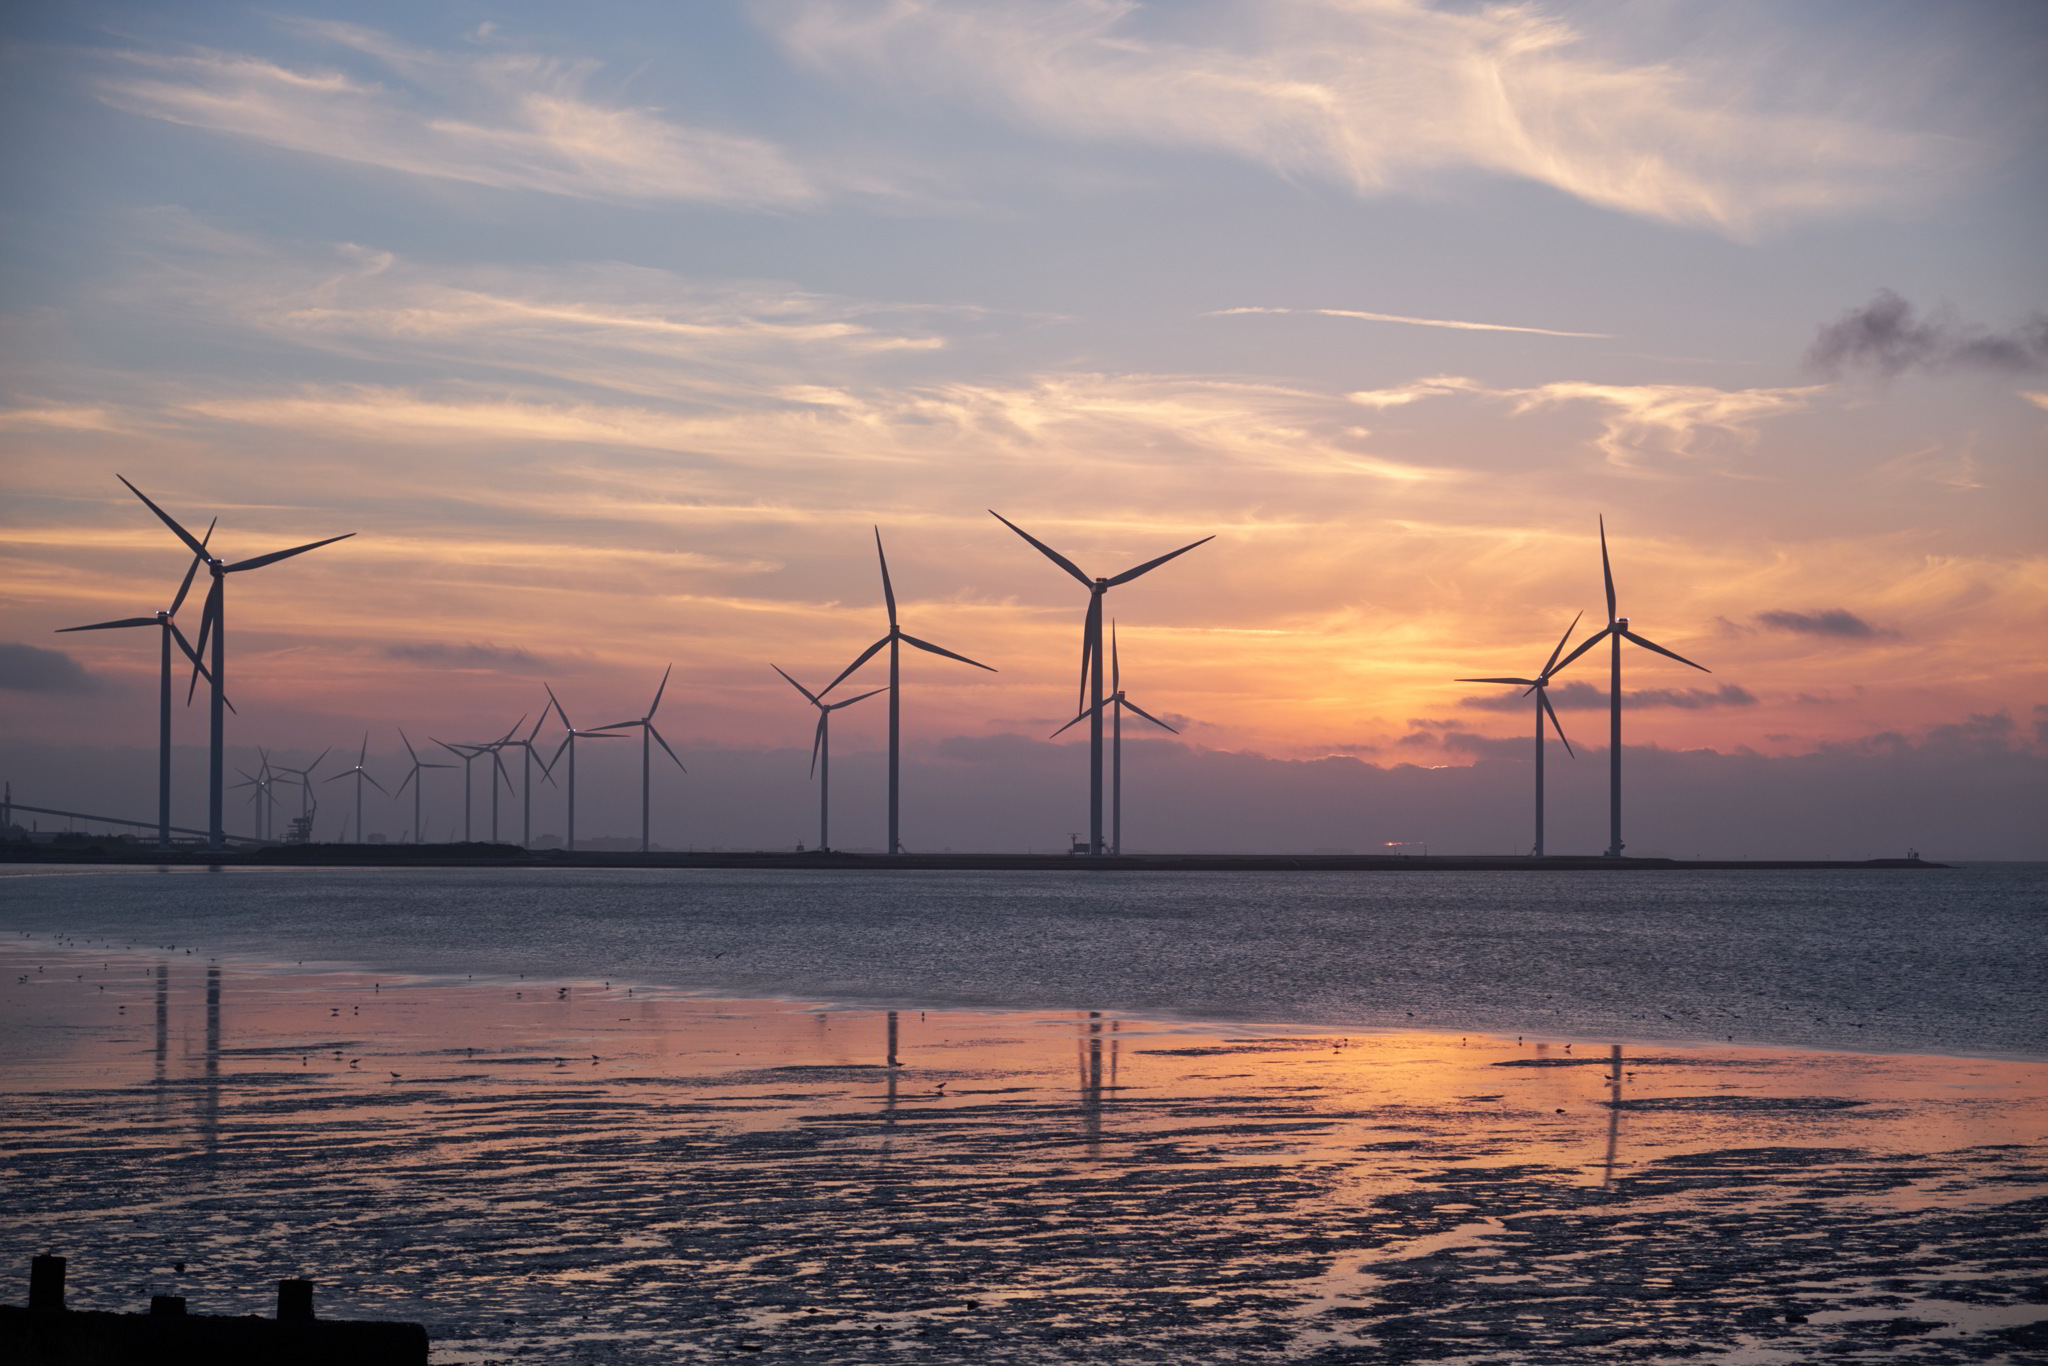 A photo of a wind farm